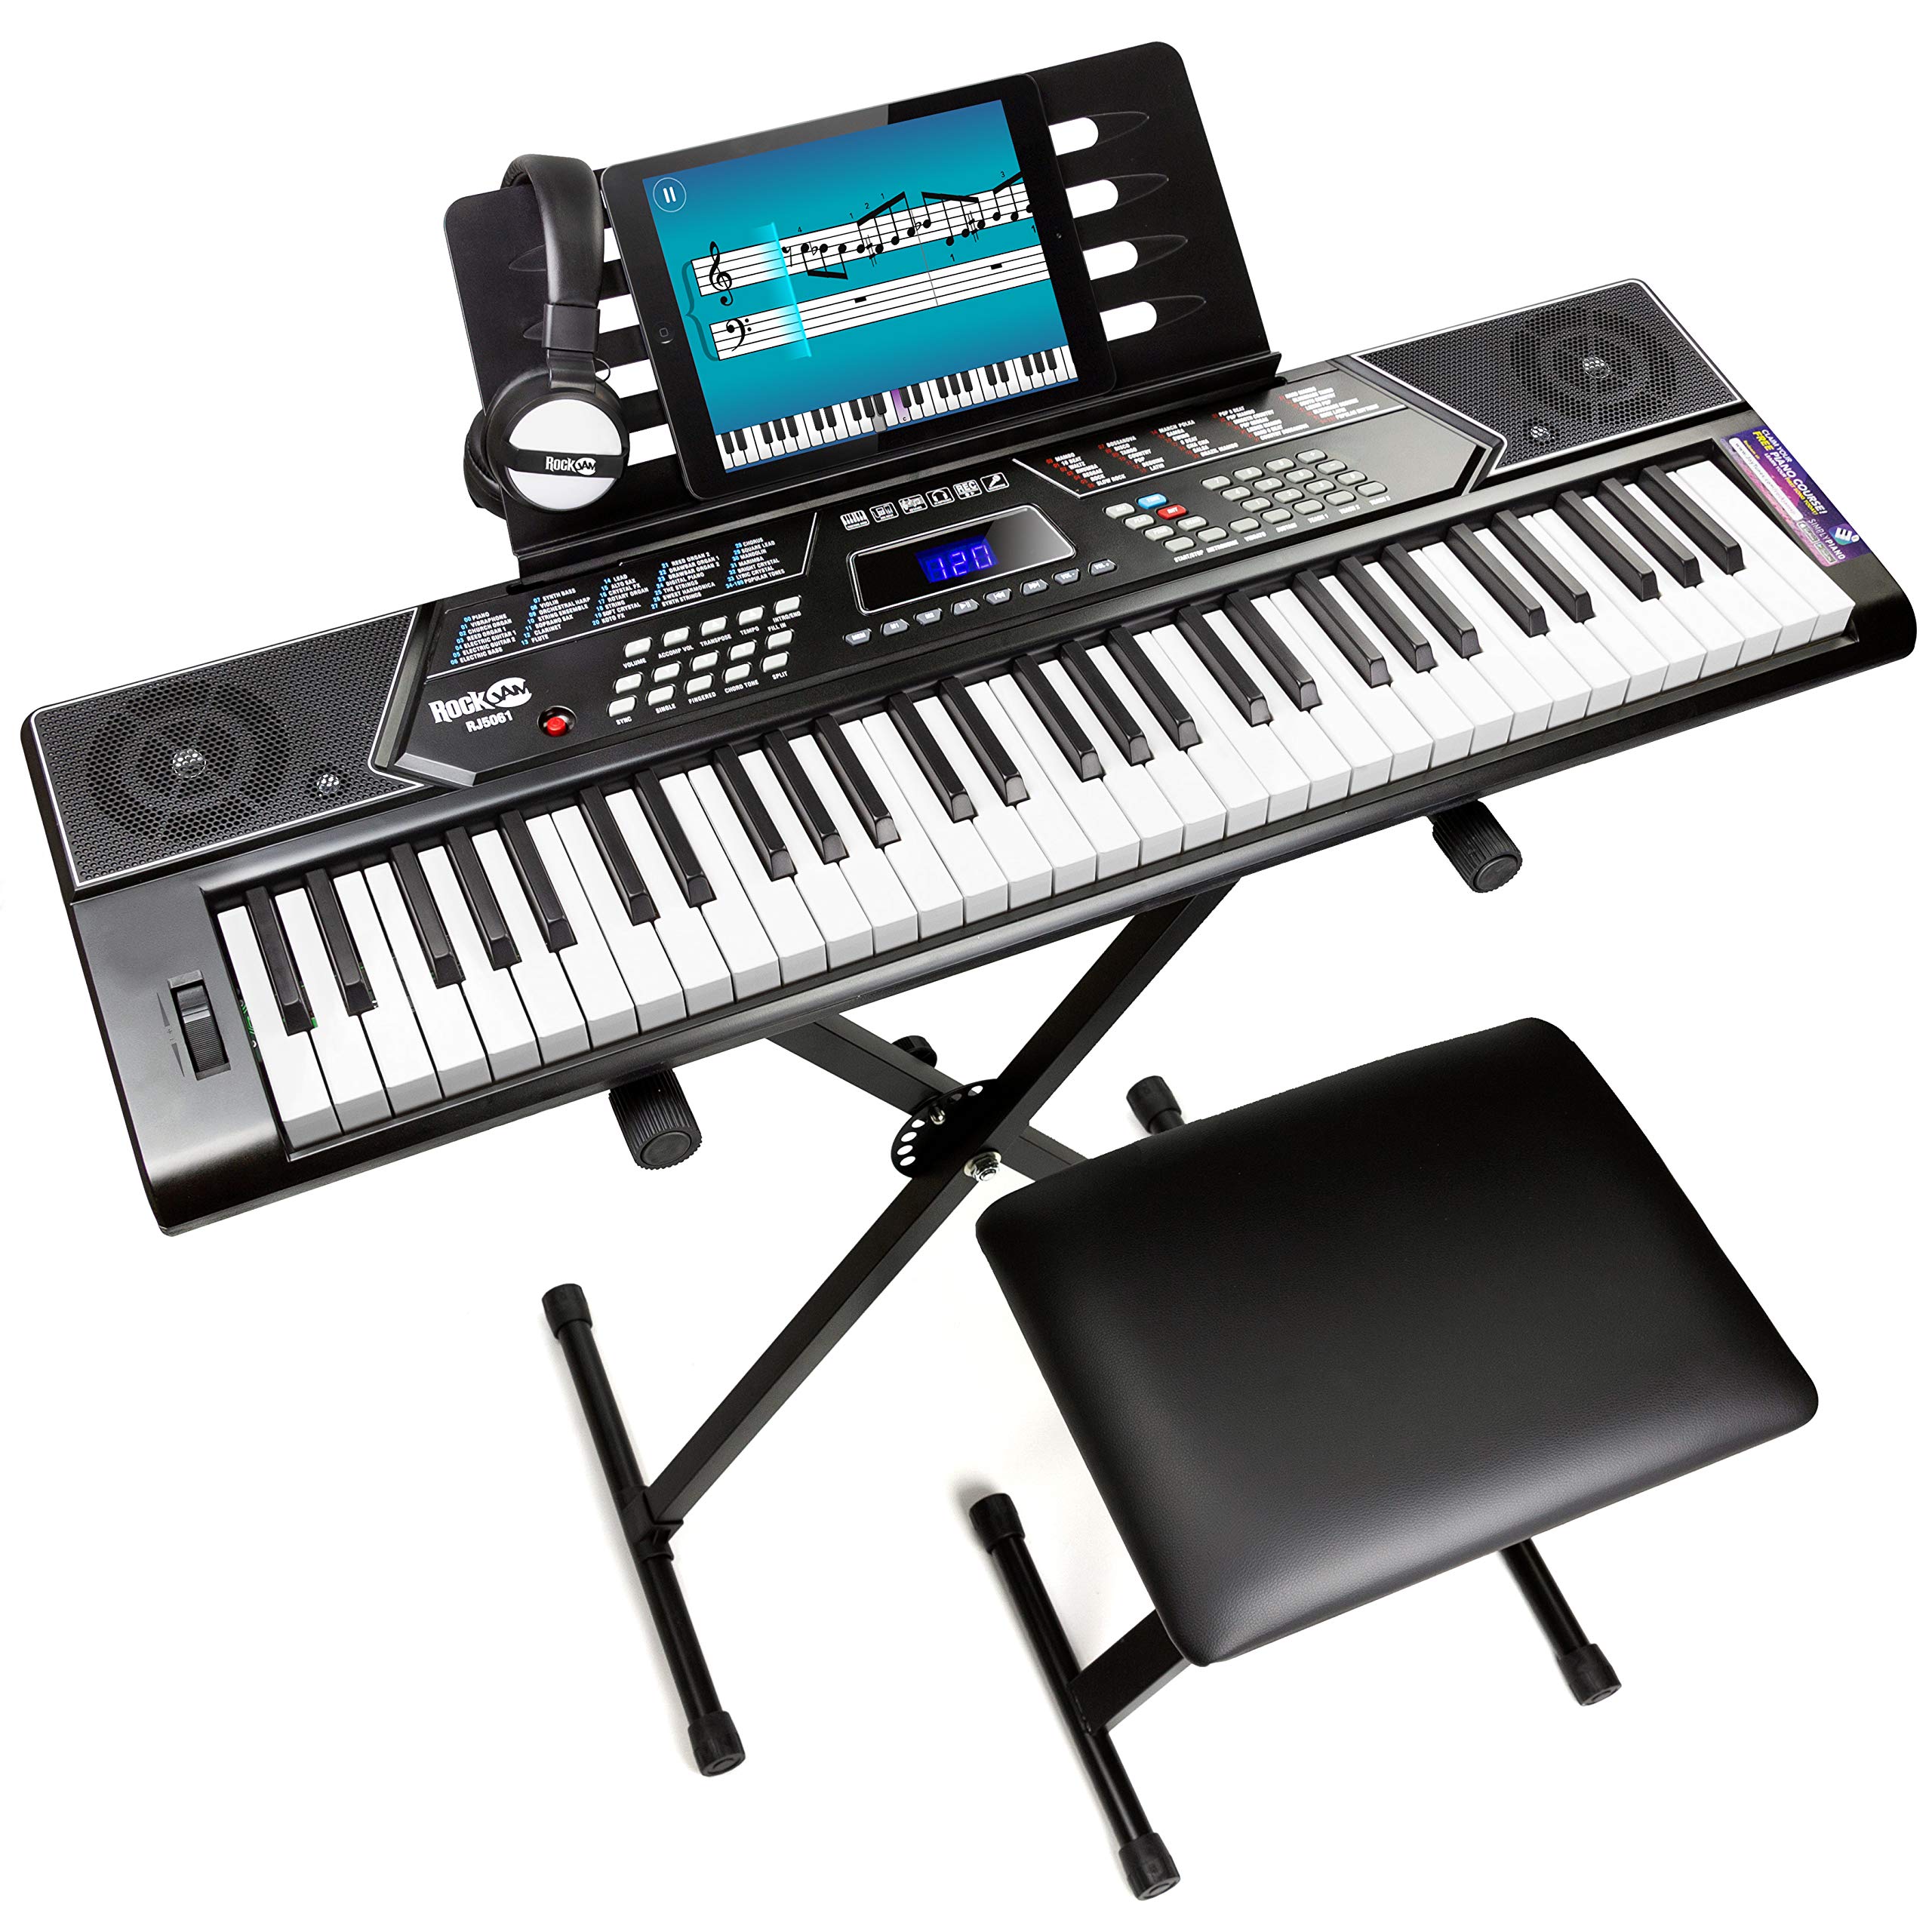 RockJam 61 键键盘钢琴，带弯音套件、键盘支架、钢琴凳、耳机、Simply Piano 应用程序和主题贴纸